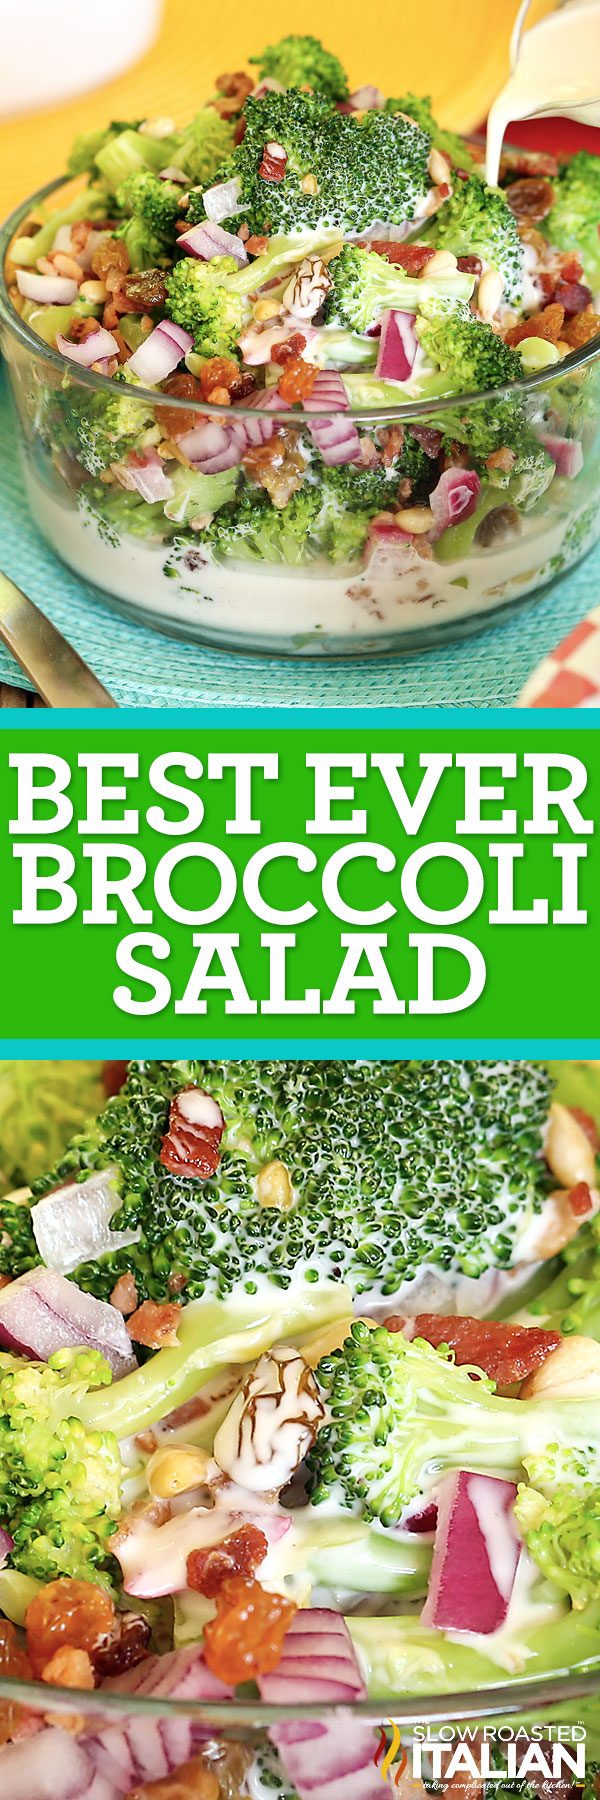 broccoli-salad-pin-6996832